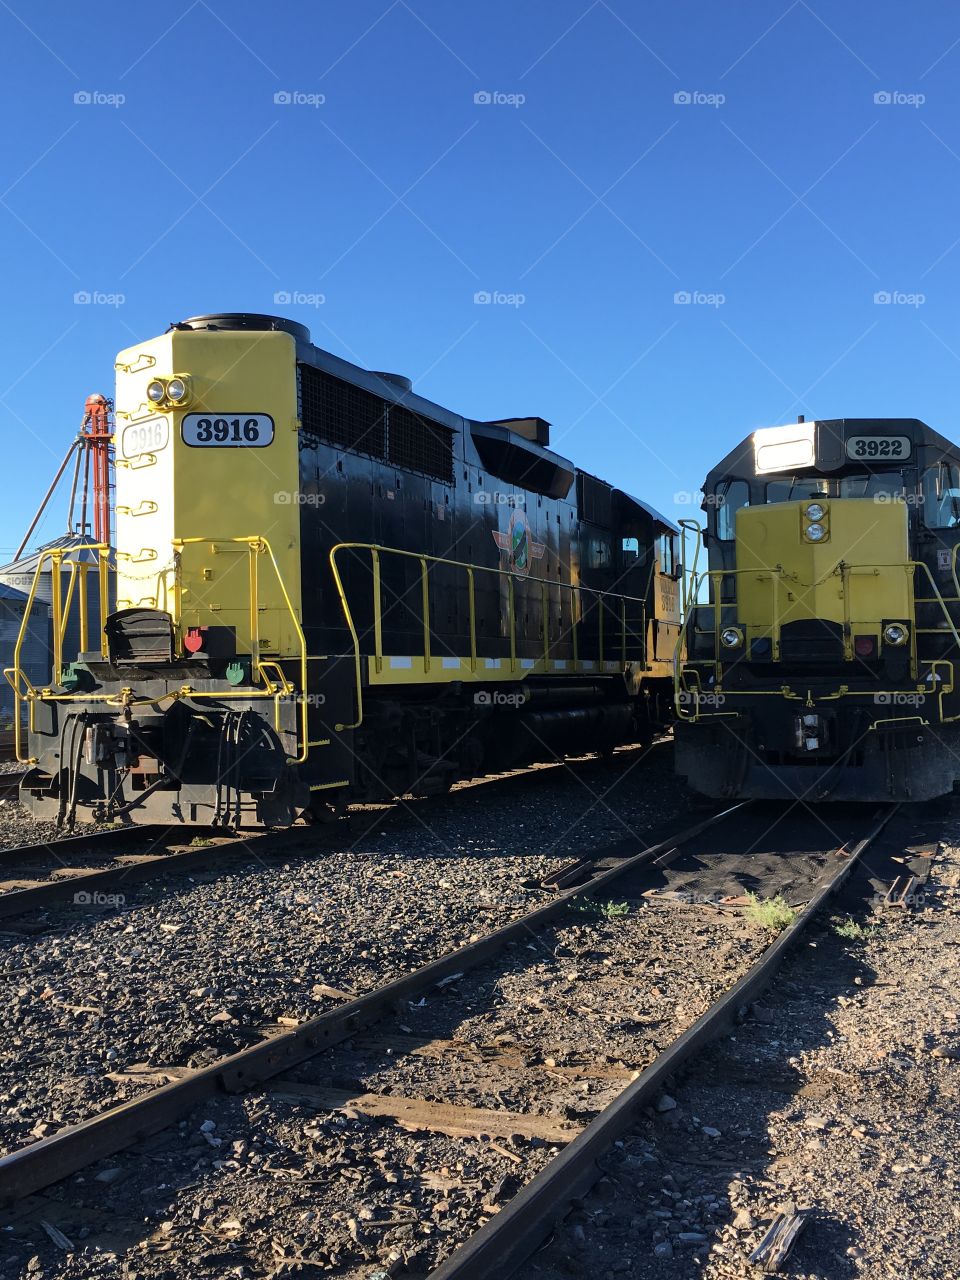 A couple train engines left alone on train tracks 